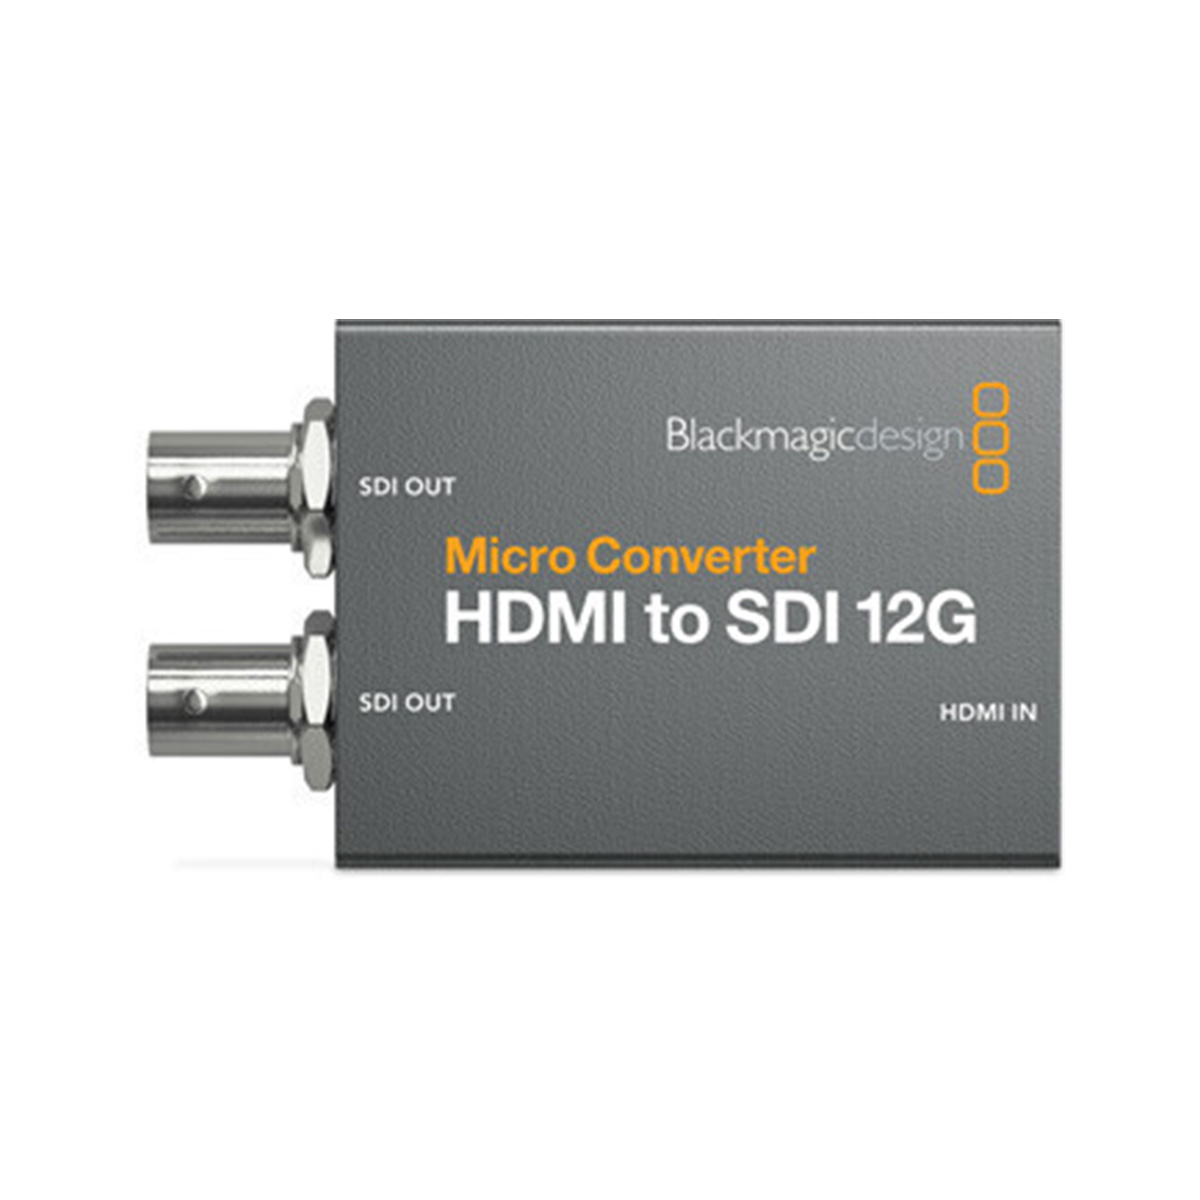 Micro Converter HDMI to SDI 12G (20 pack)